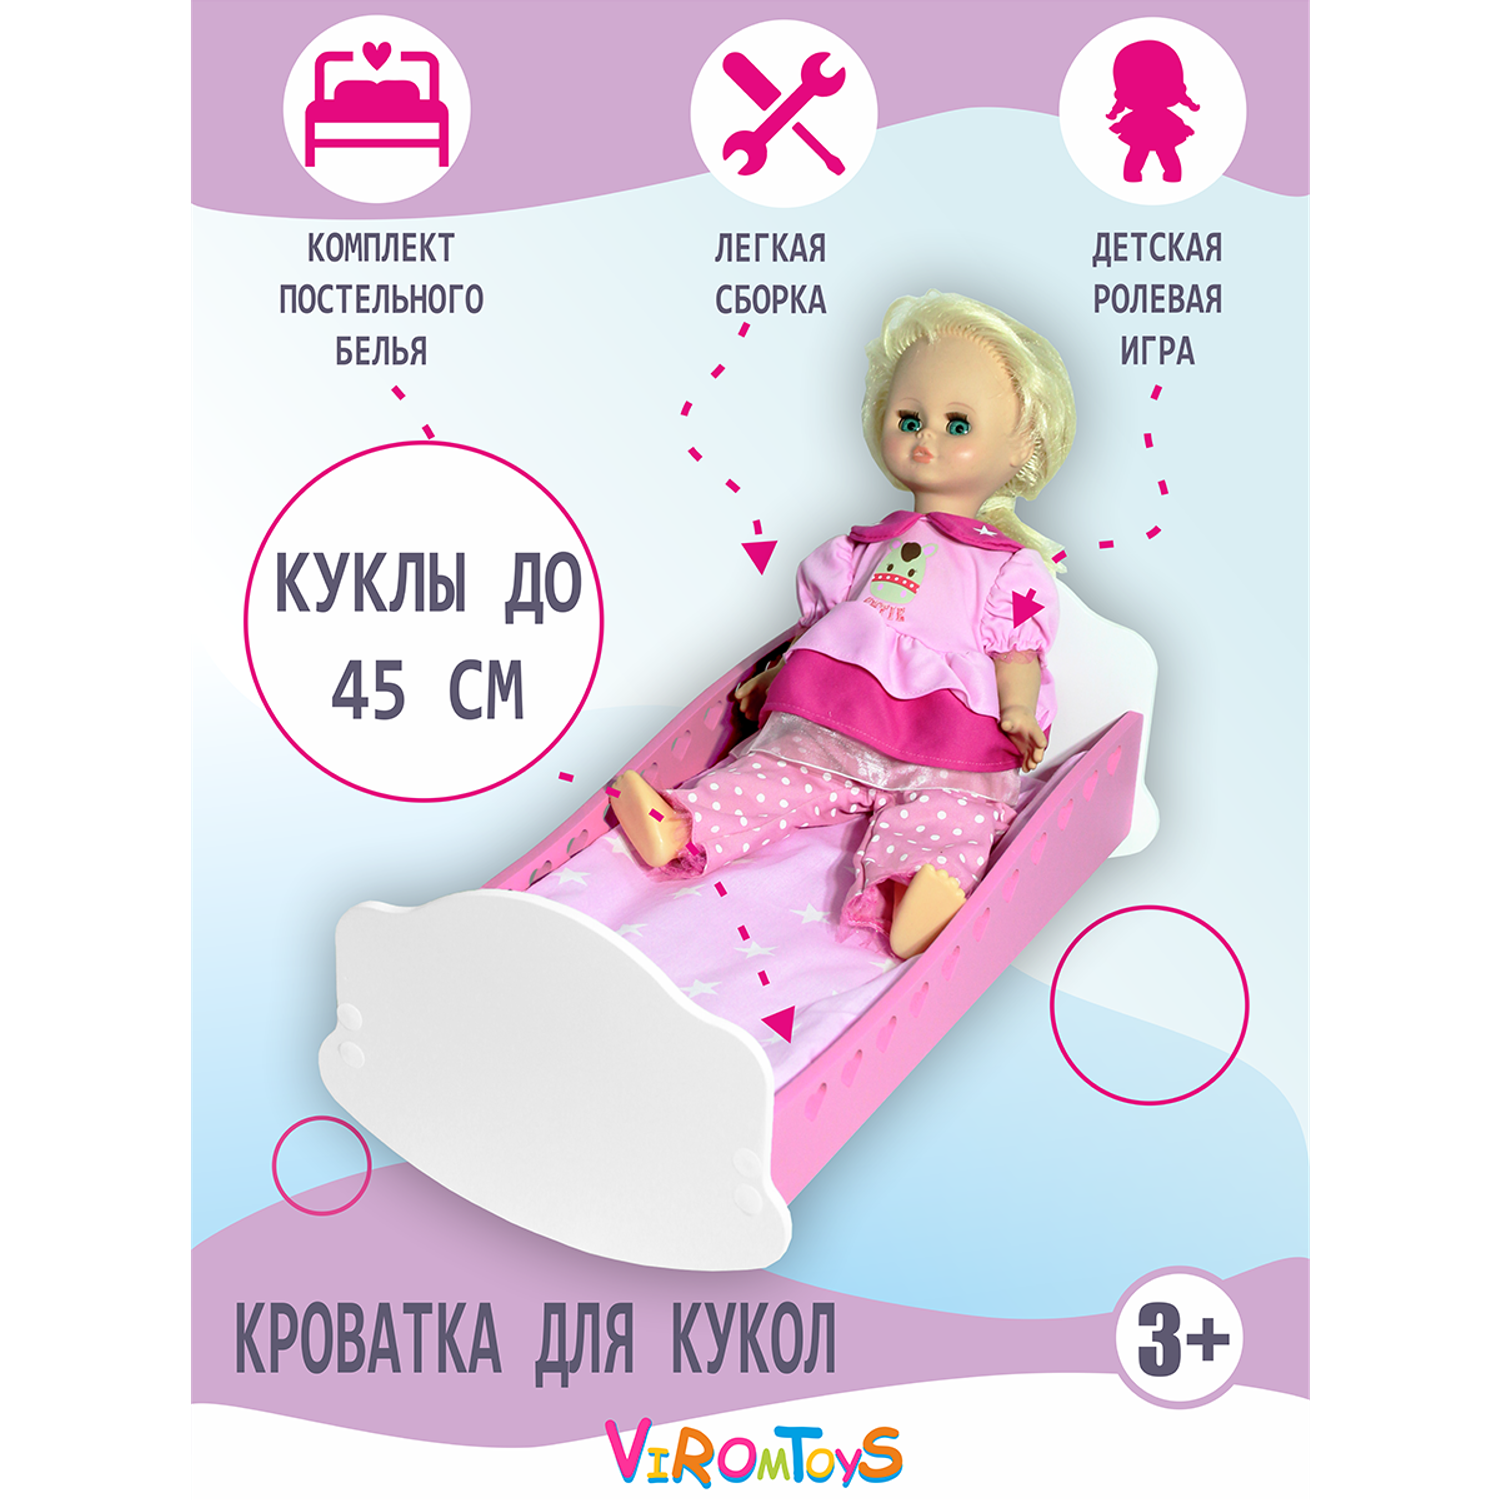 Кроватка для кукол до 45 см. ViromToys мебель Кд0017 - фото 2